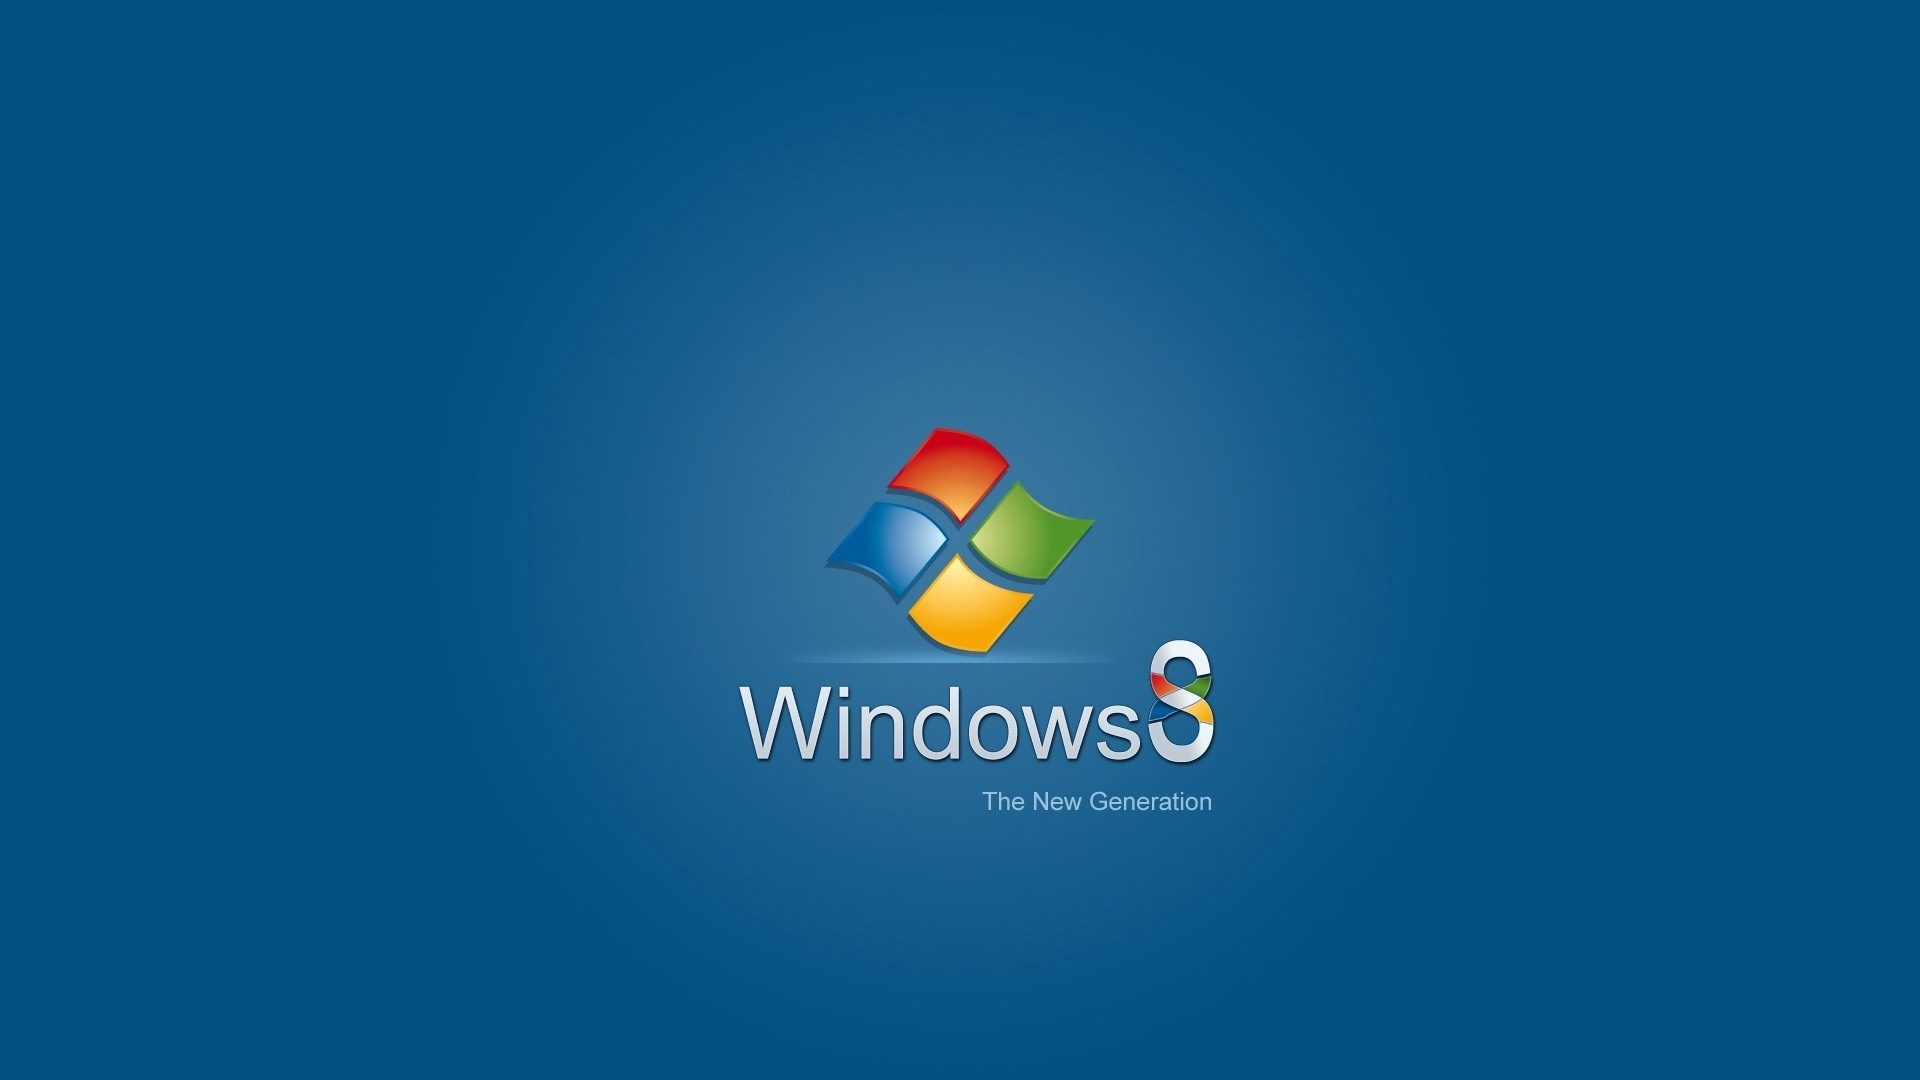 Windows 8 主题壁纸 (二)2 - 1920x1080